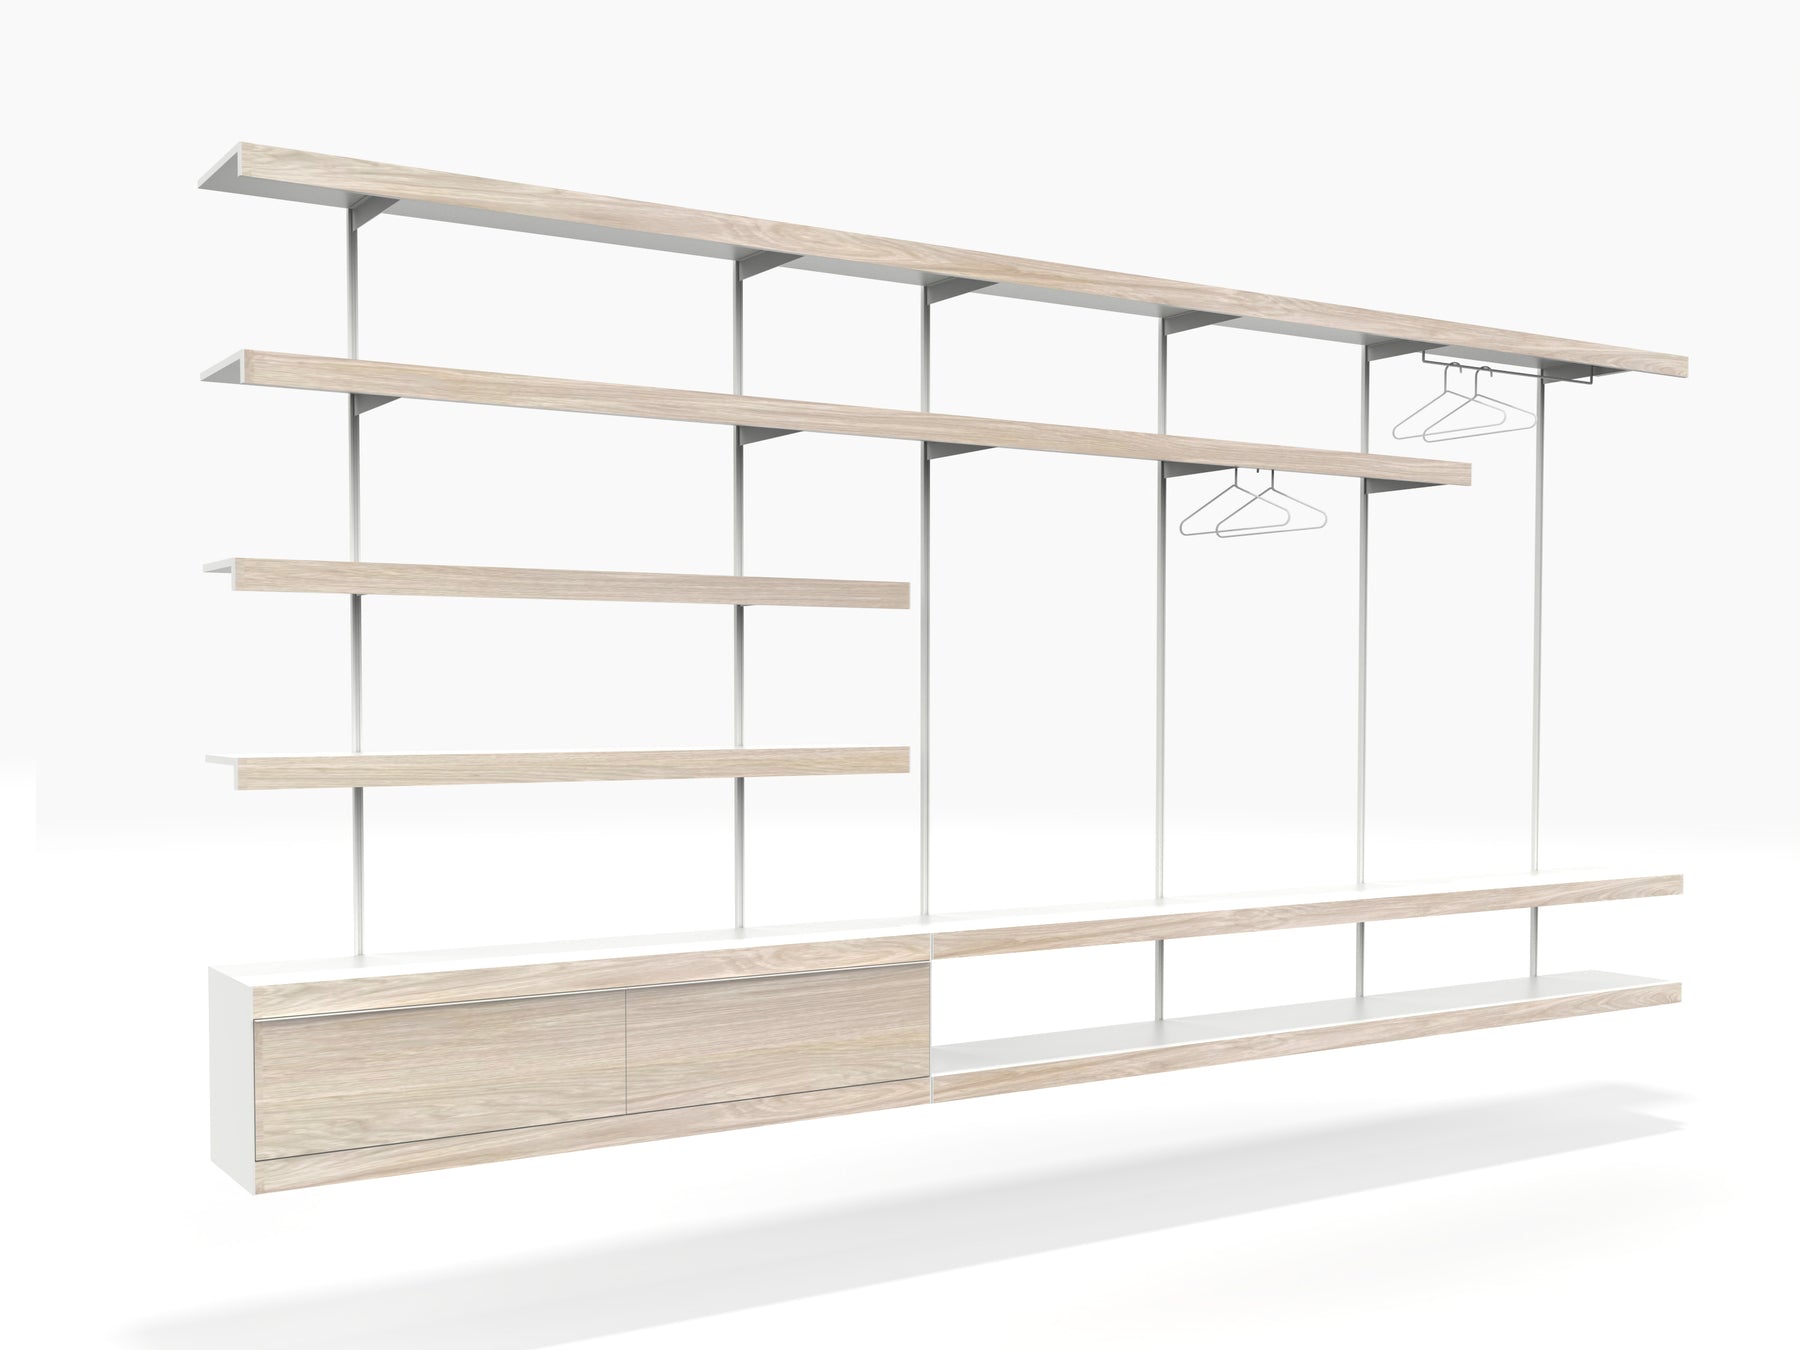 Contemporary wall mounted wardrobe shelving system made from aluminium